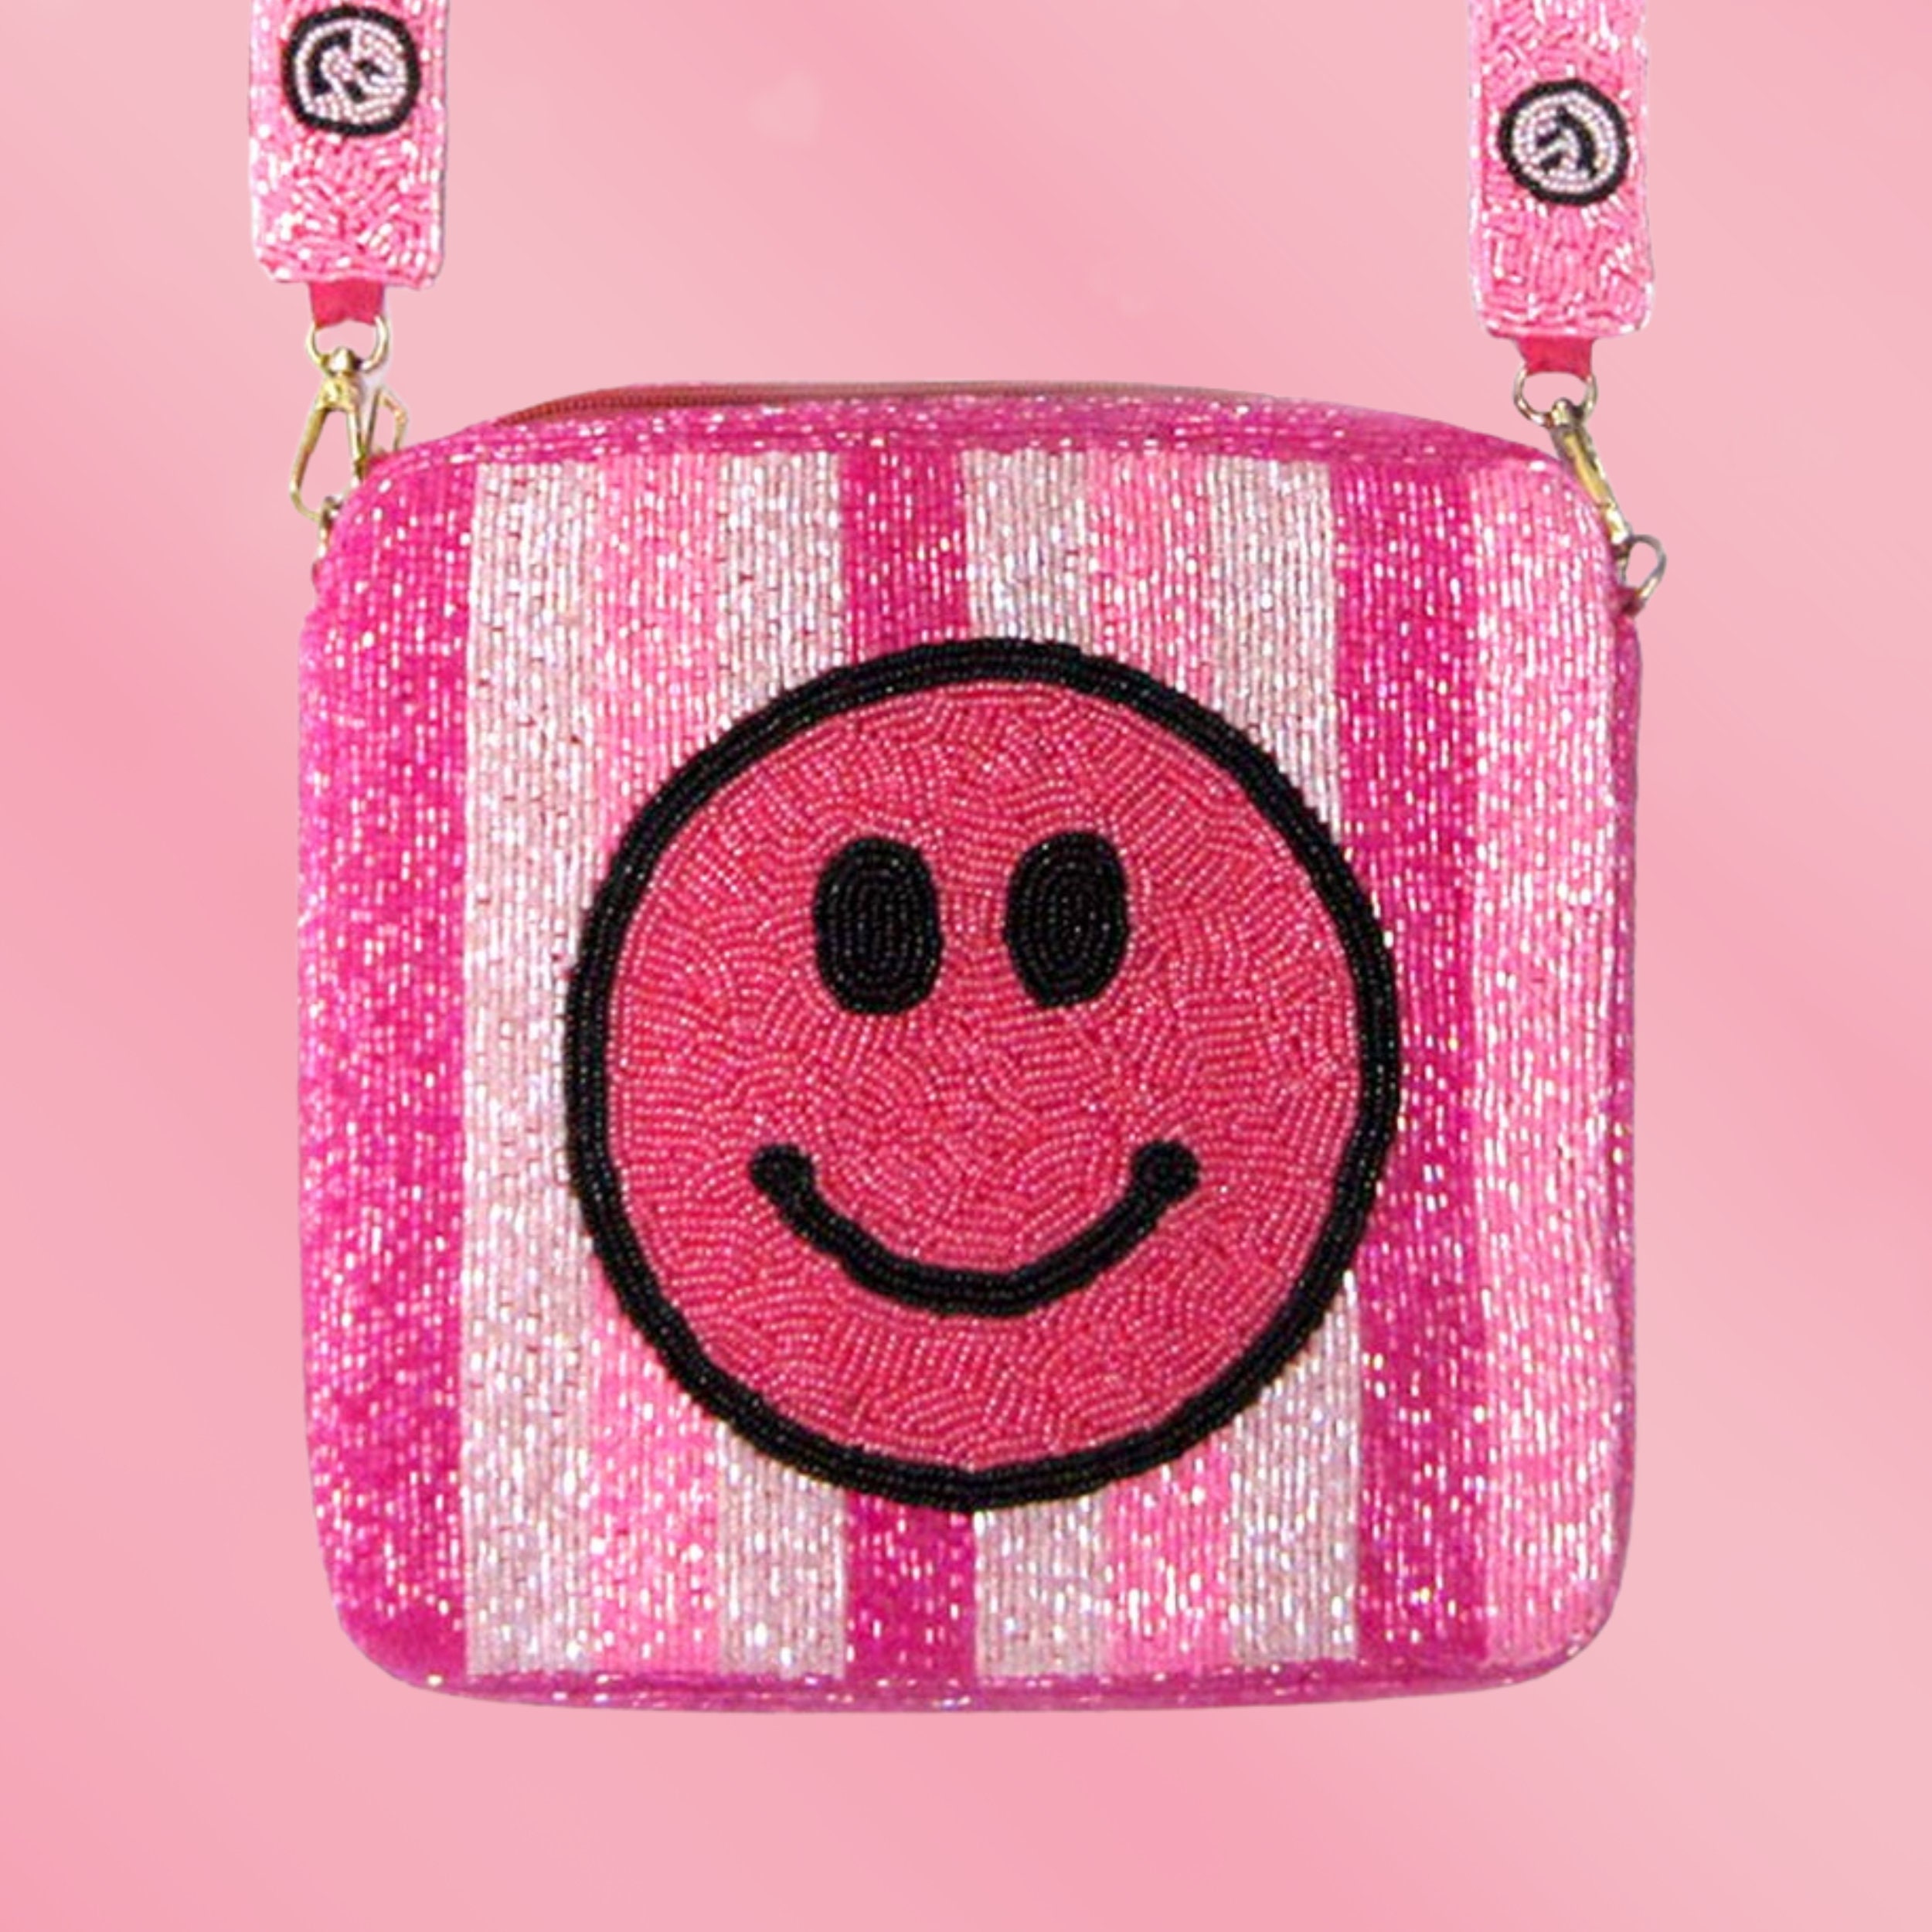 Crossbody Bag Shoulder Strap in Pink Stripe, Groovy's